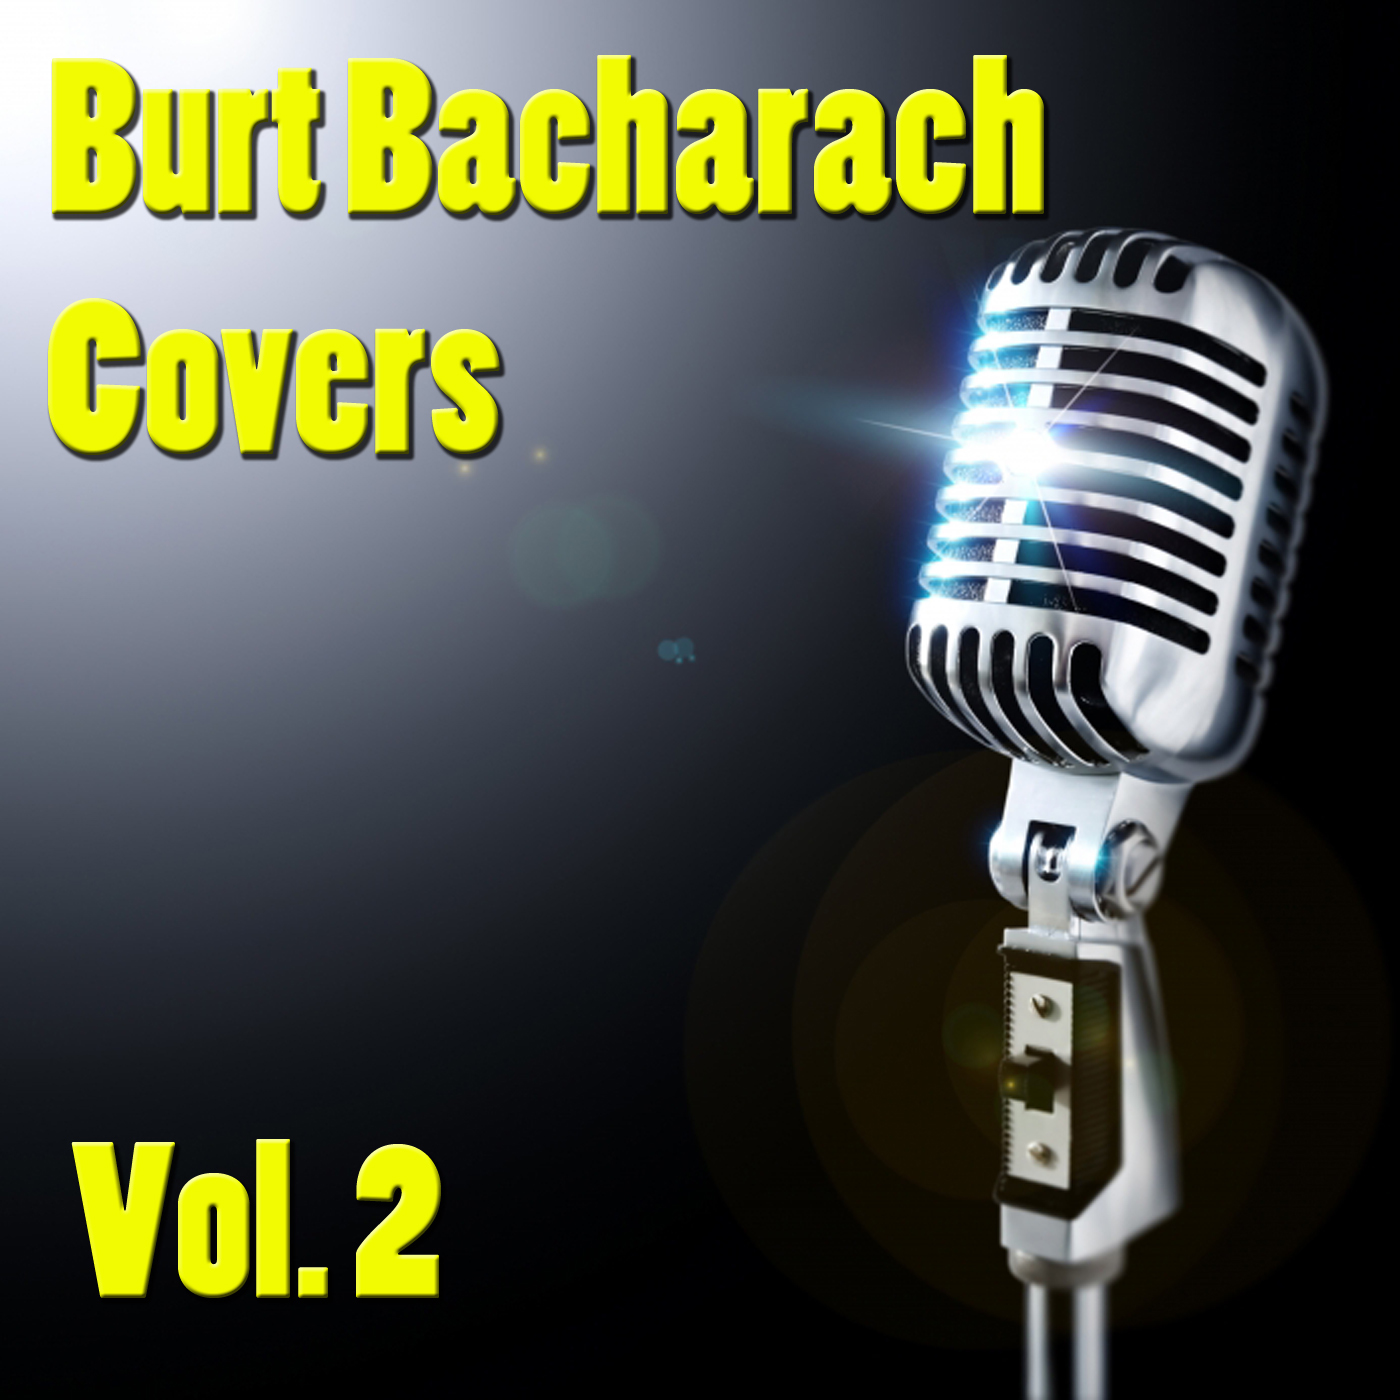 Burt Bacharach Covers, Vol. 2